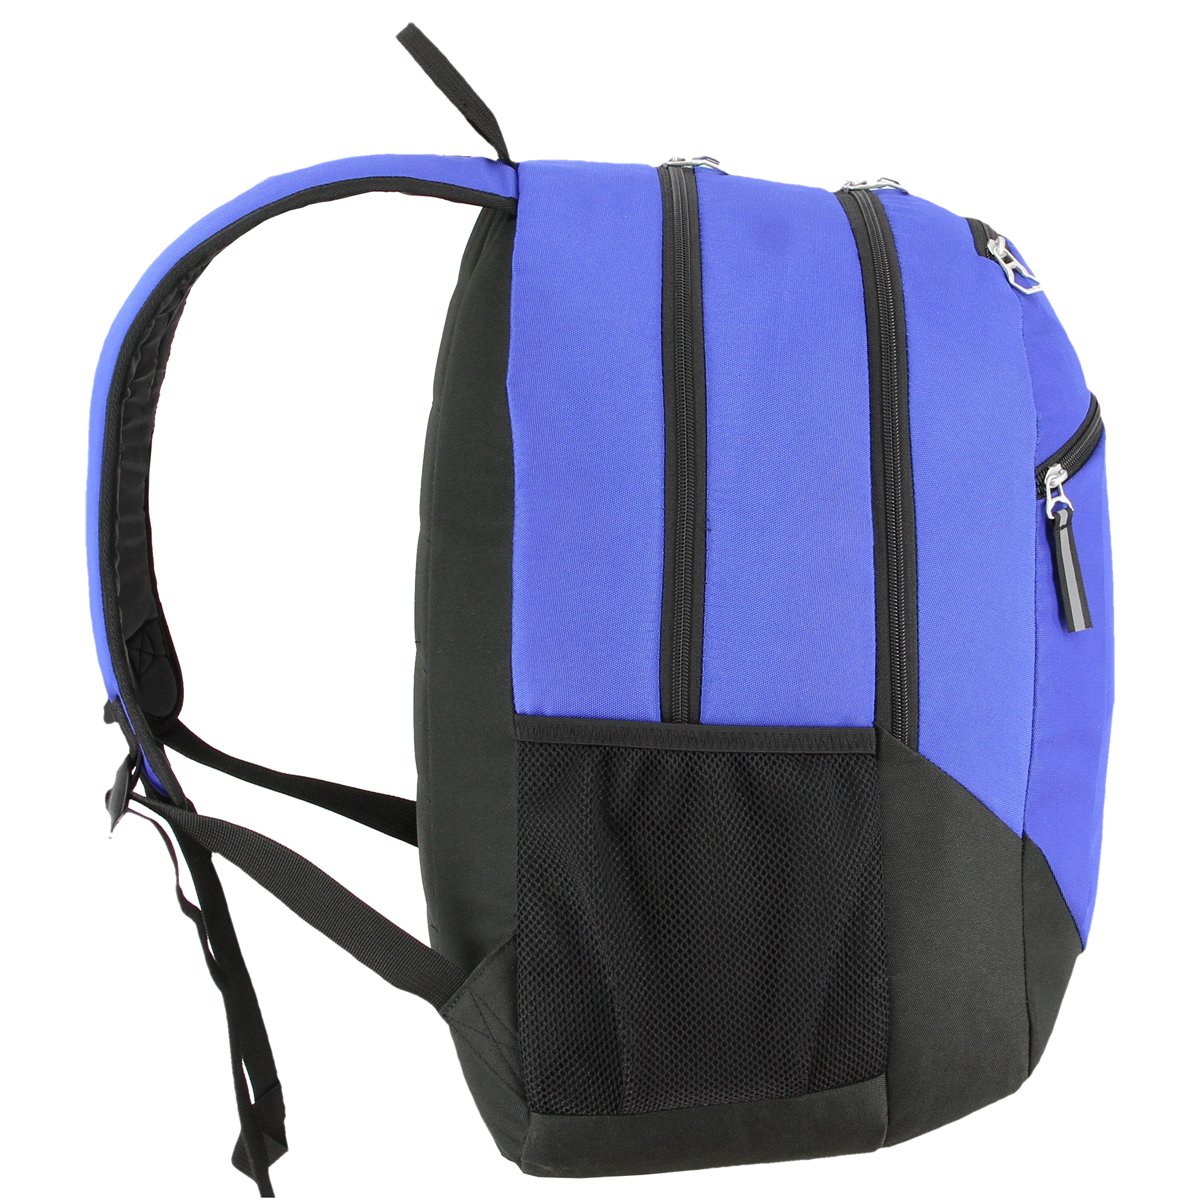 adidas Striker 2 Backpack, Team Royal Blue/Black/White, One Size